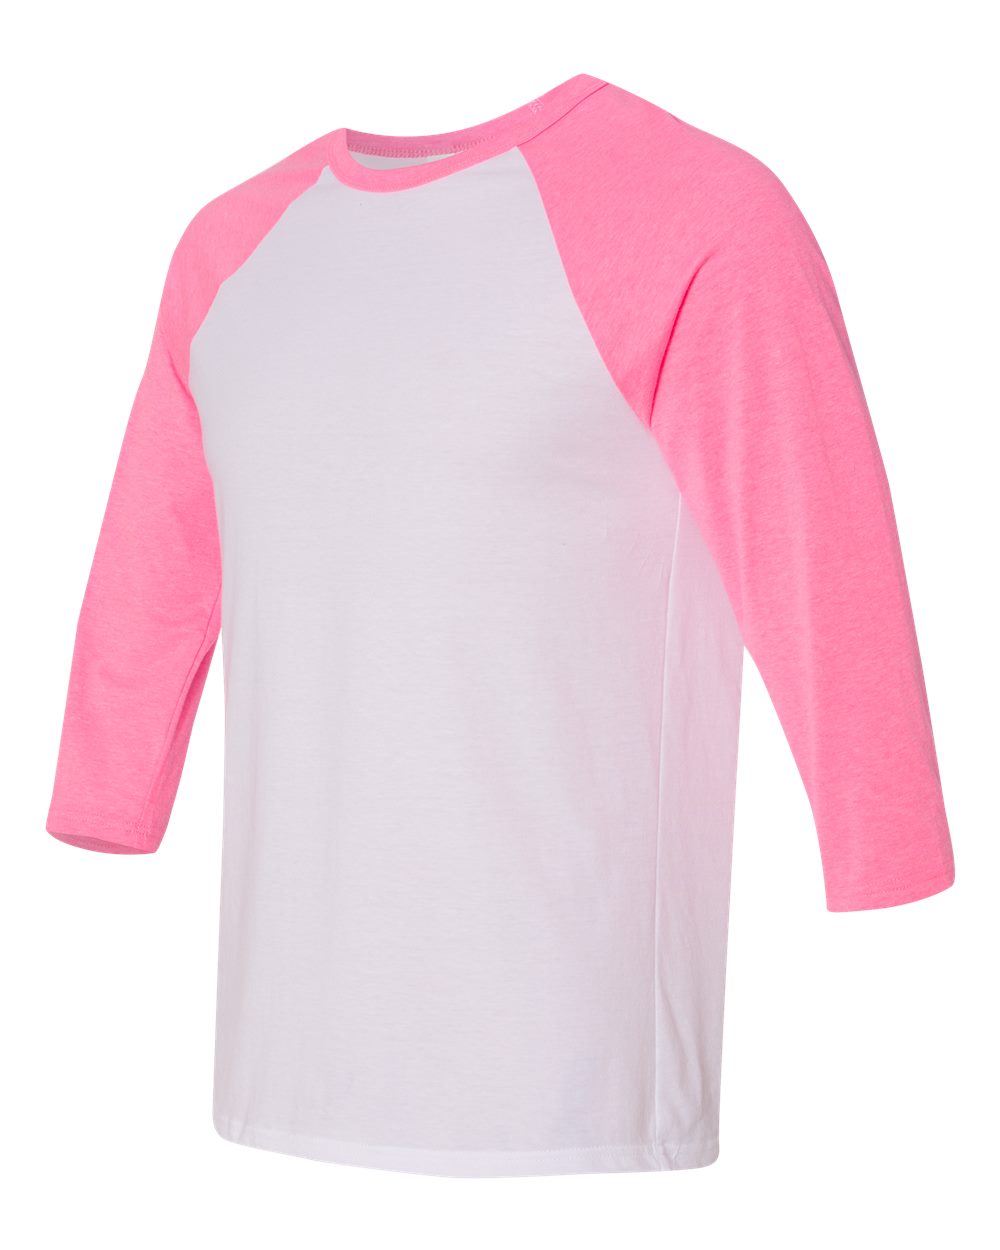 Bella + Canvas Unisex 3/4-Sleeve Baseball T-Shirt